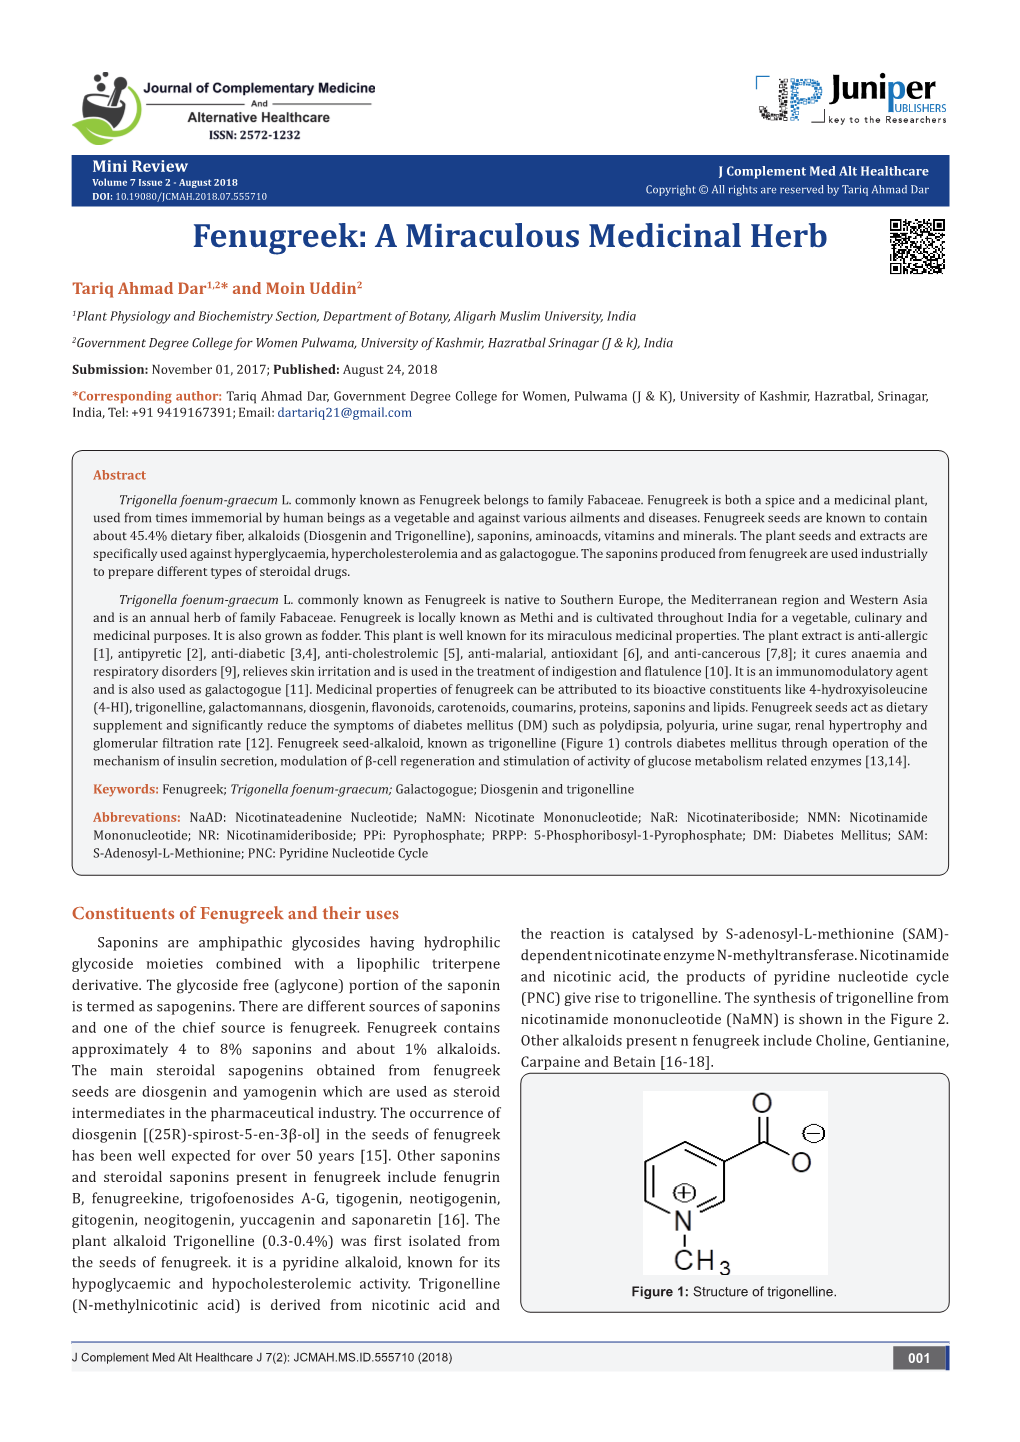 Fenugreek: a Miraculous Medicinal Herb